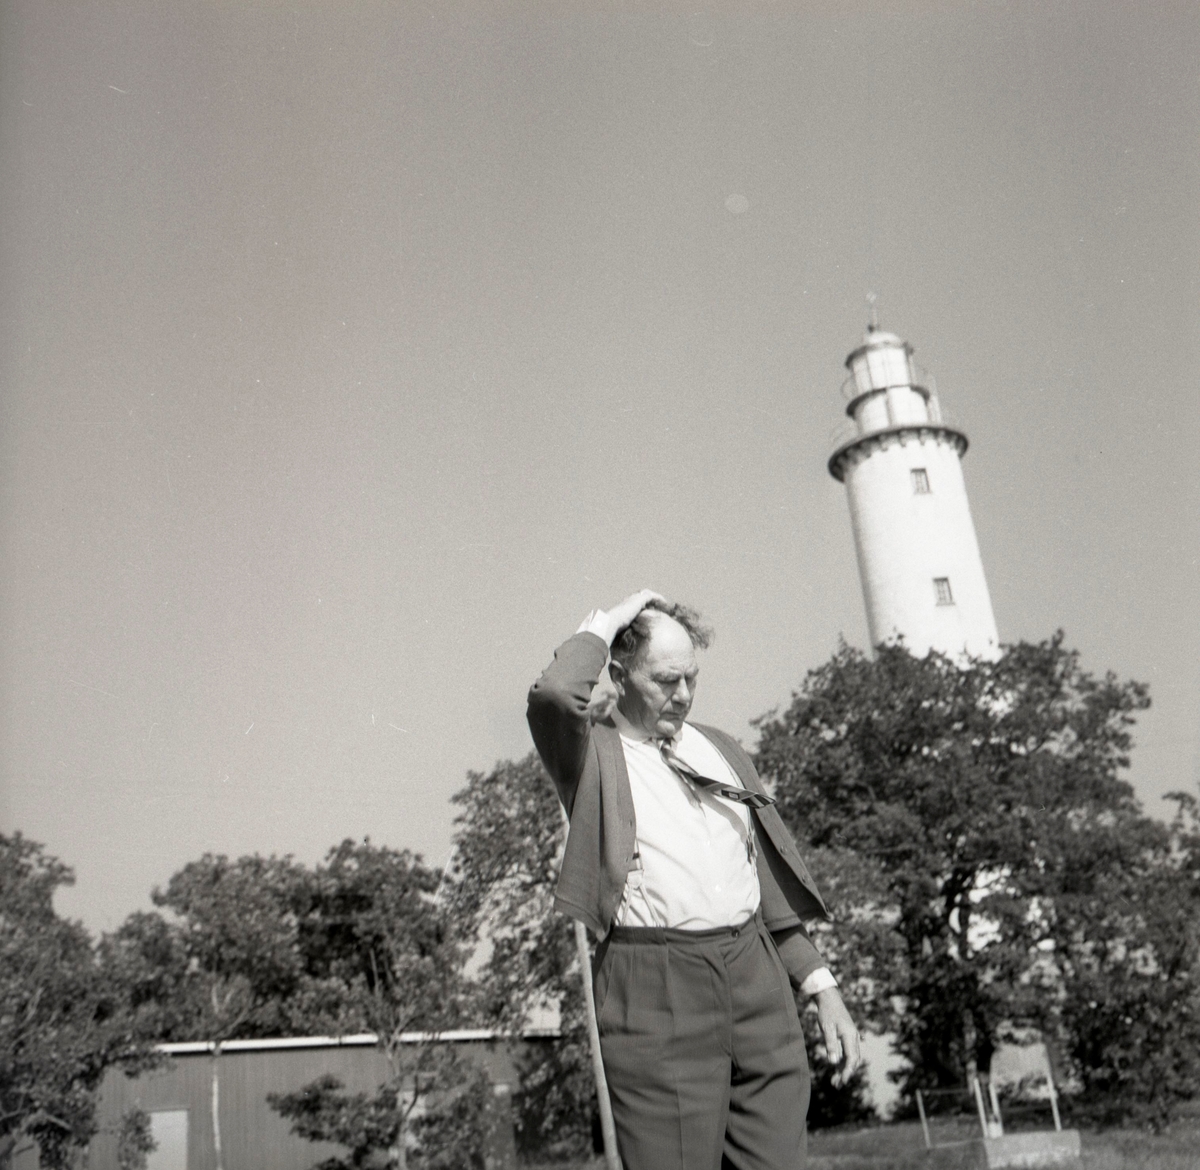 Fyrmästare Samuelsson, Ölands norra udde 11/9 1960, i bakgrunden fyren Långe Erik.